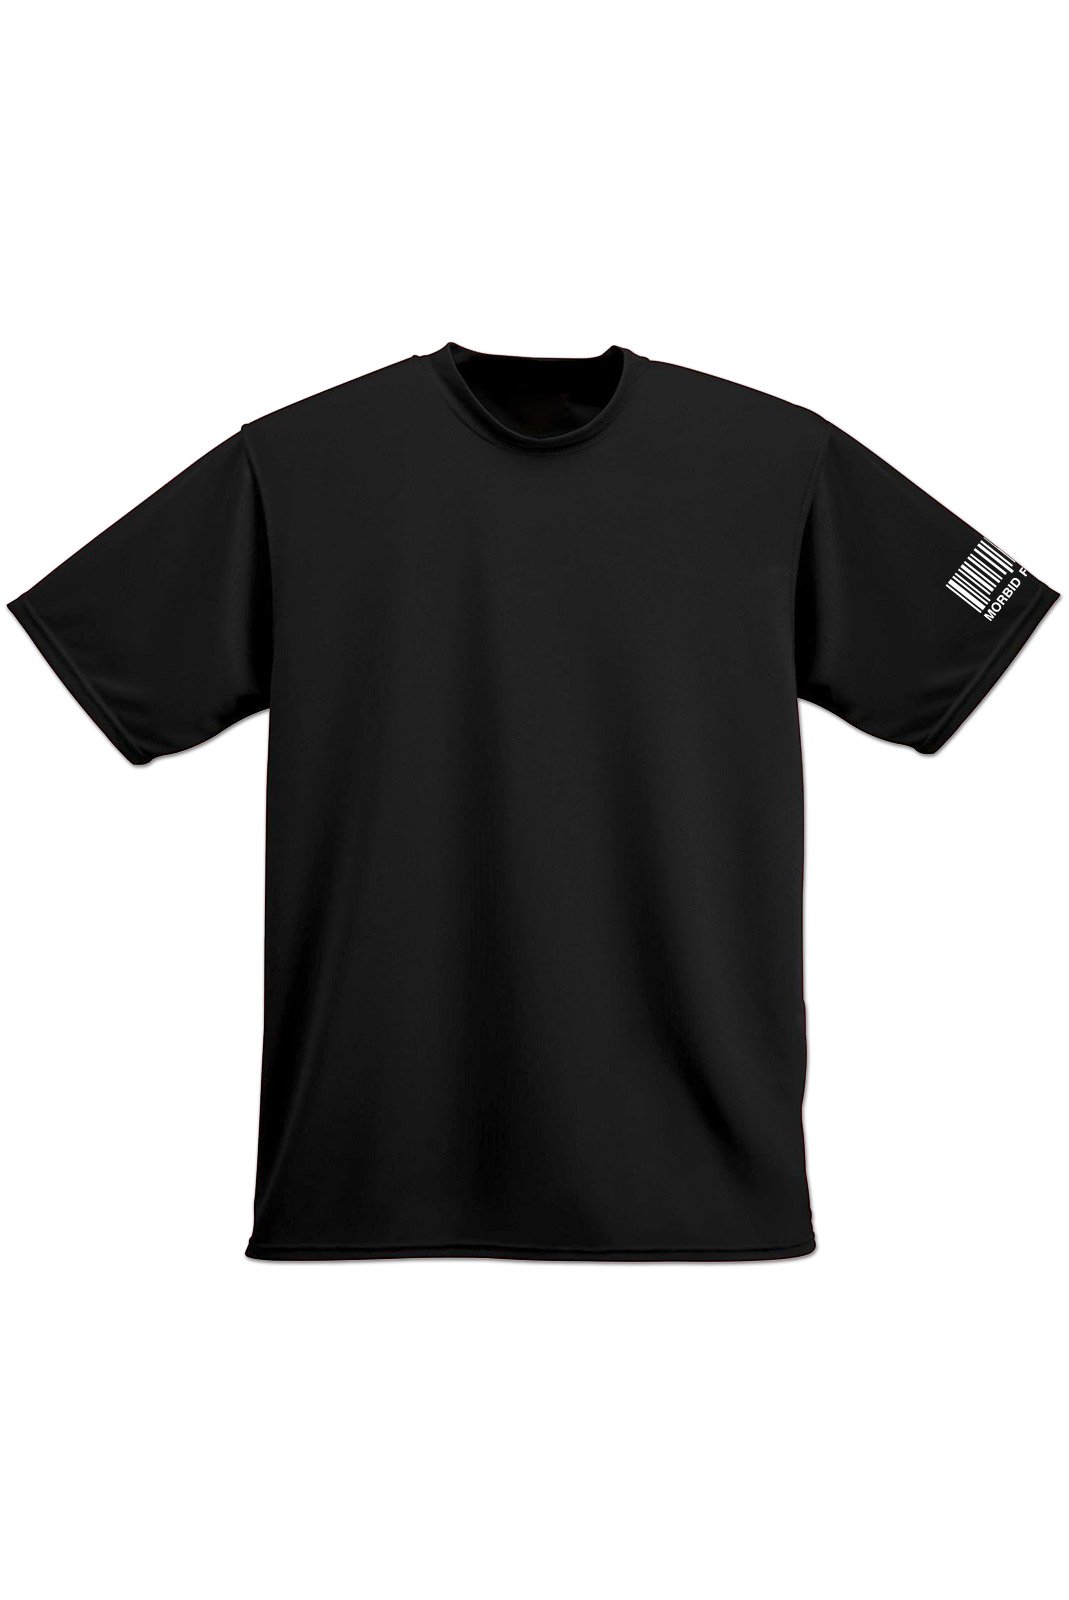 MFLA Morbid Fiber Los Angeles Street Wear Plain Black tshirt